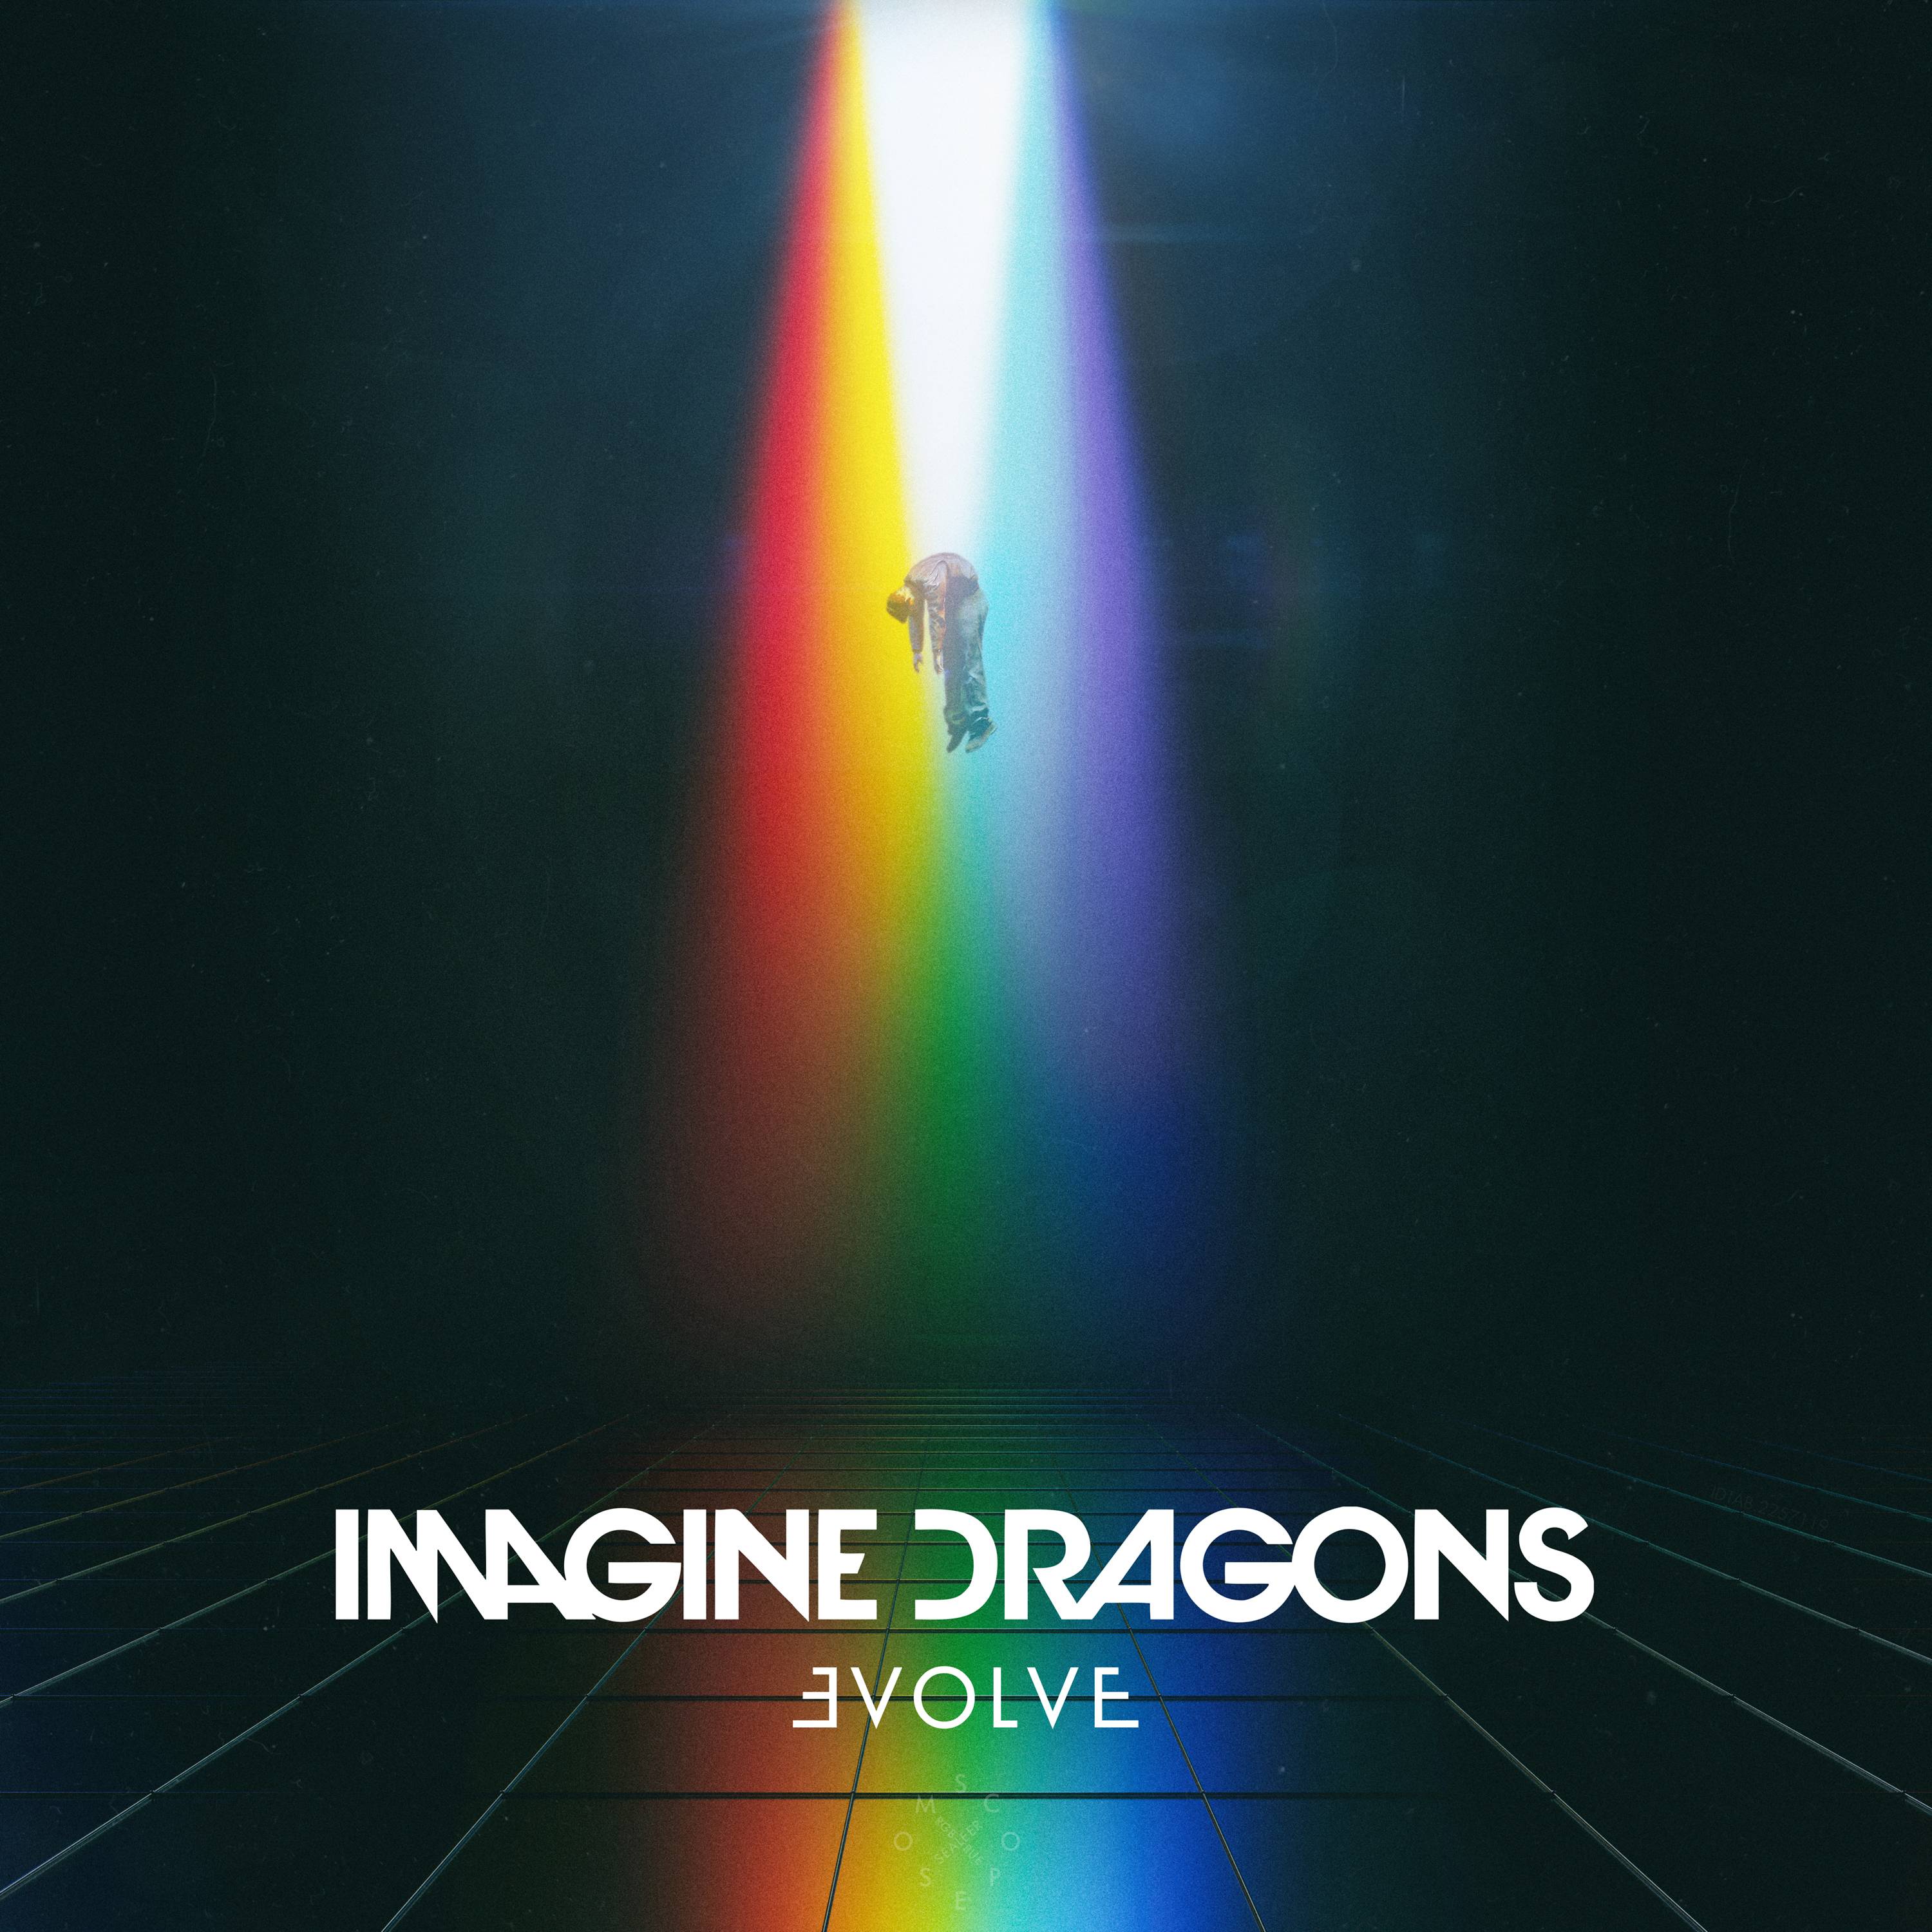 Evolve - Imagine Dragons album art